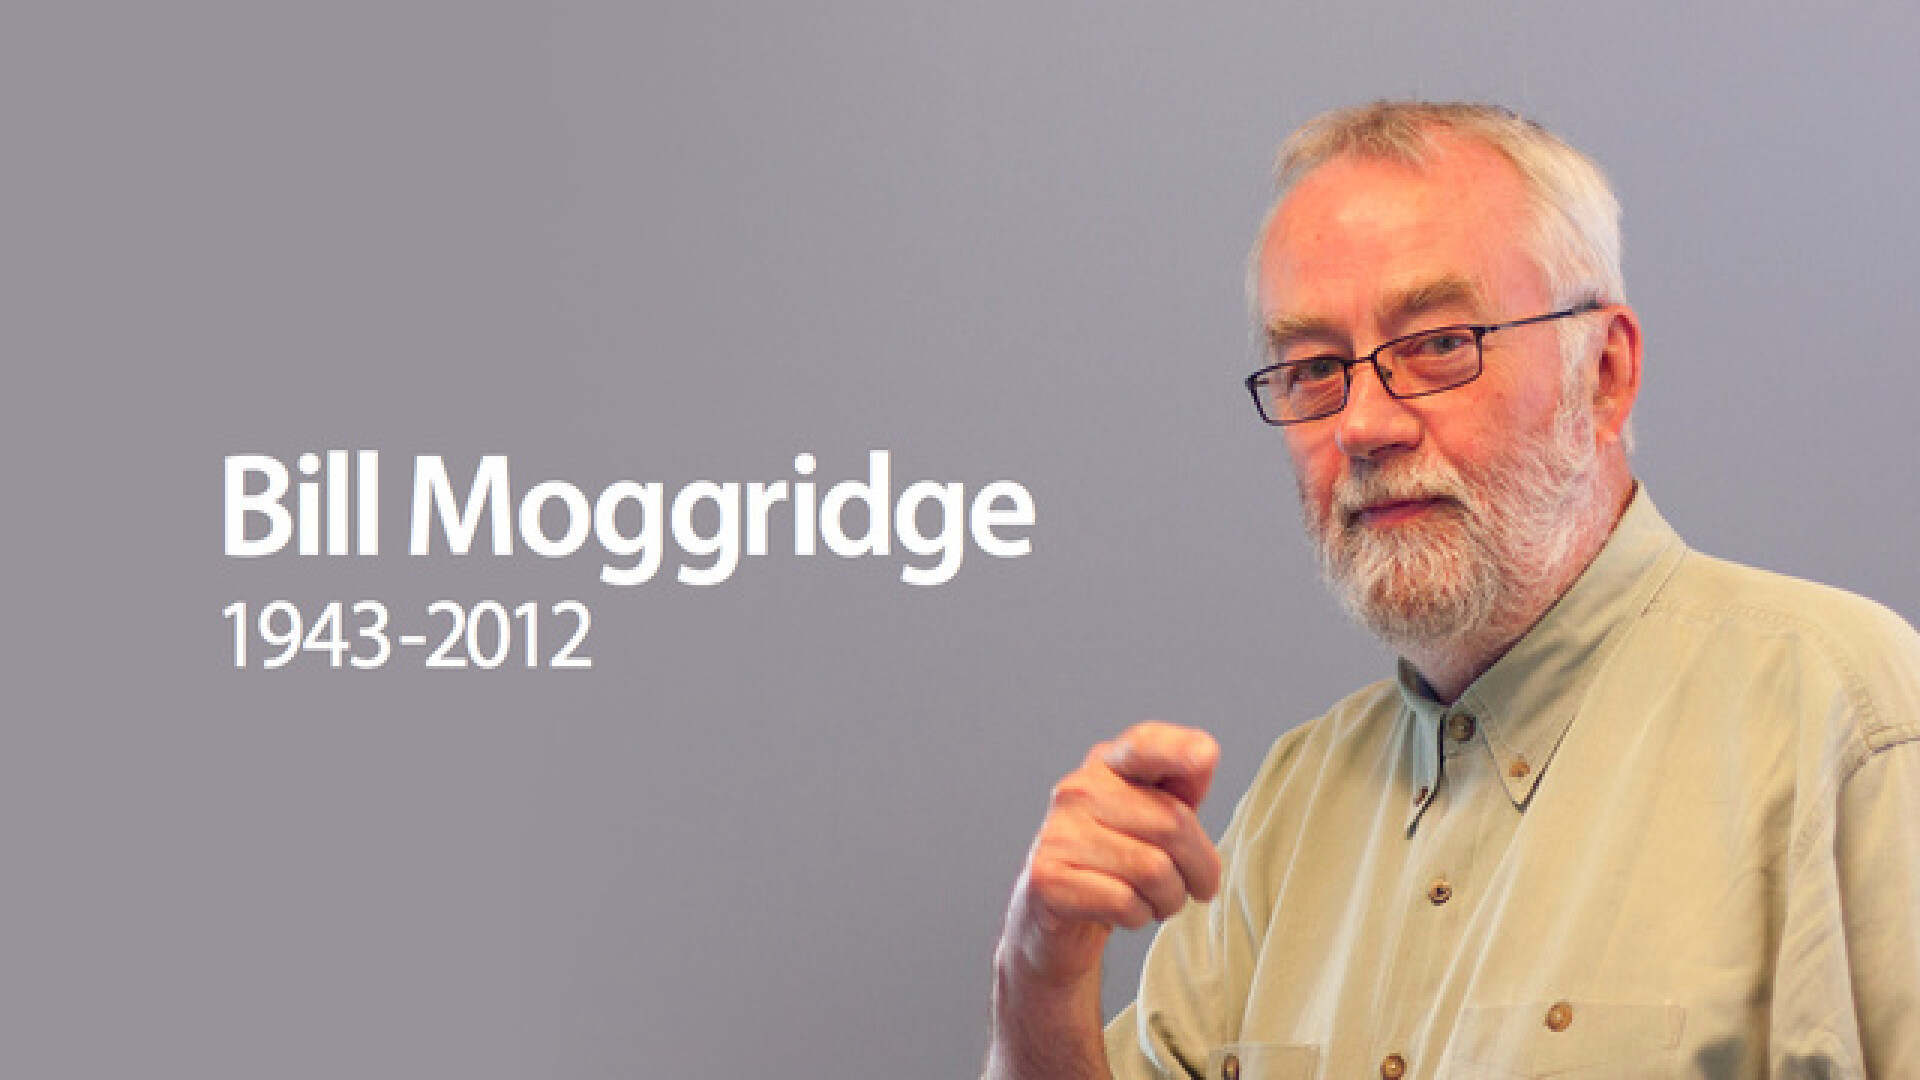 Bill Moggridge